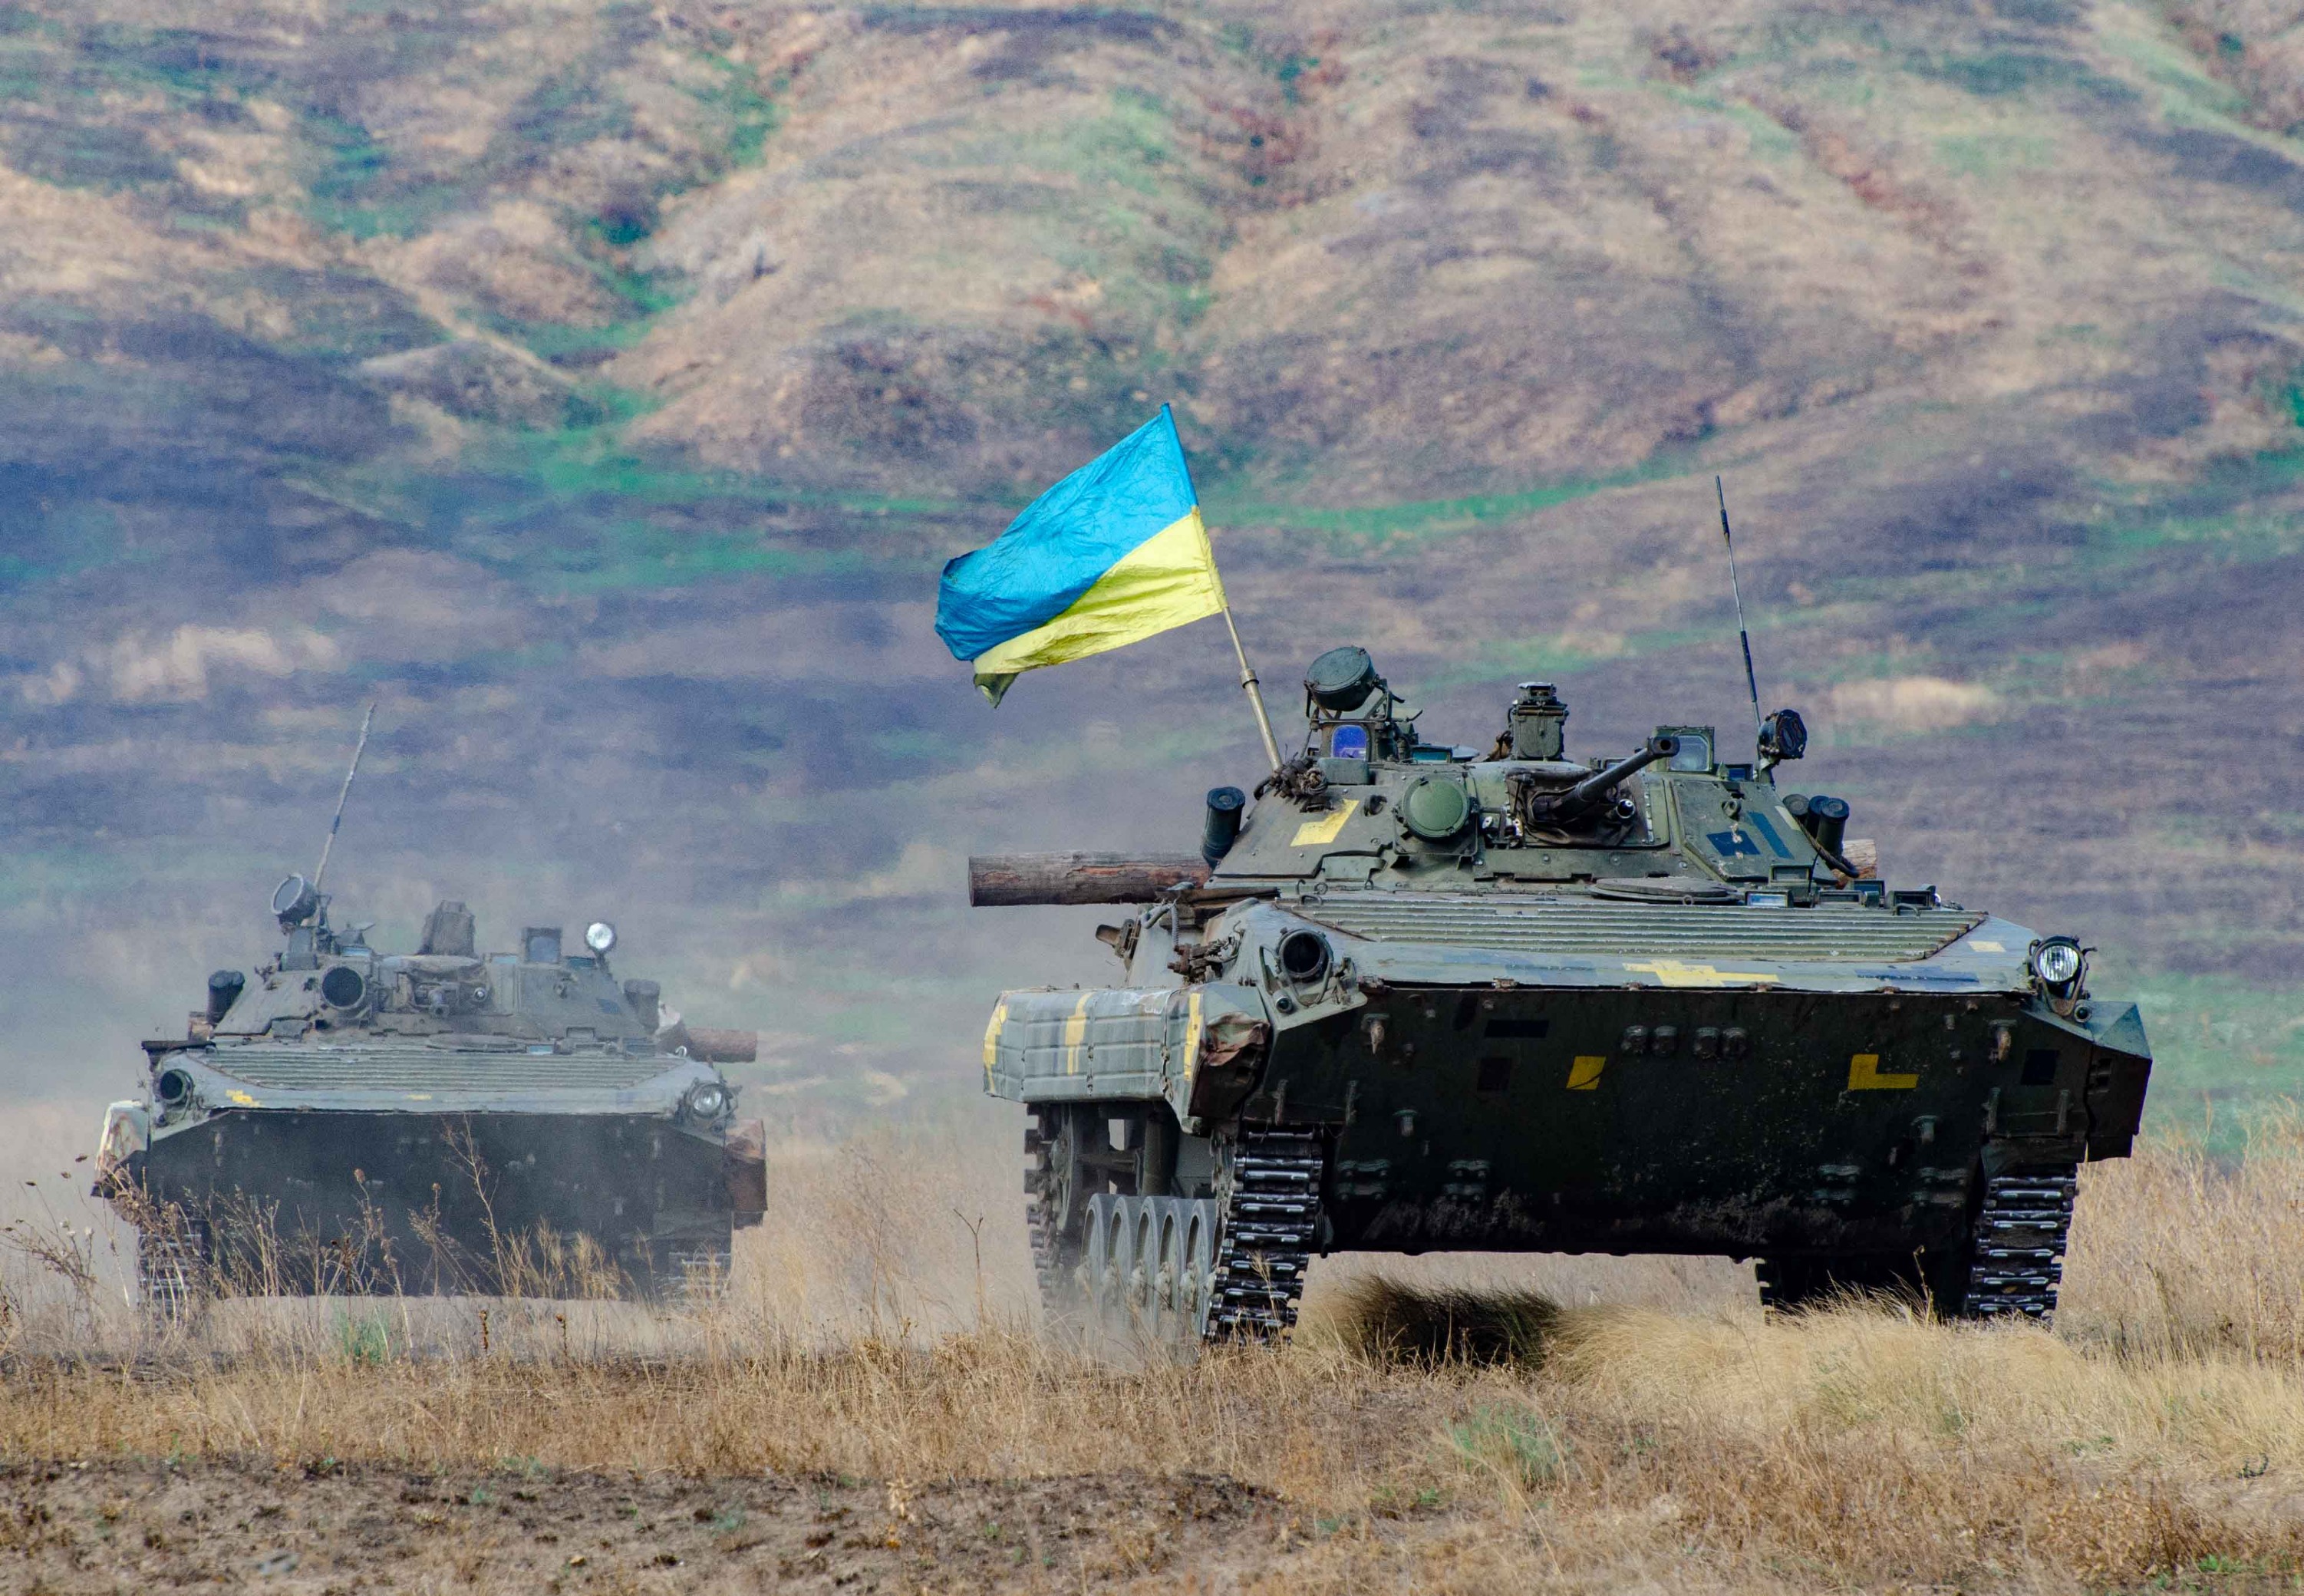 EU to provide 31 million euros to enhance Ukraine’s defense capabilities